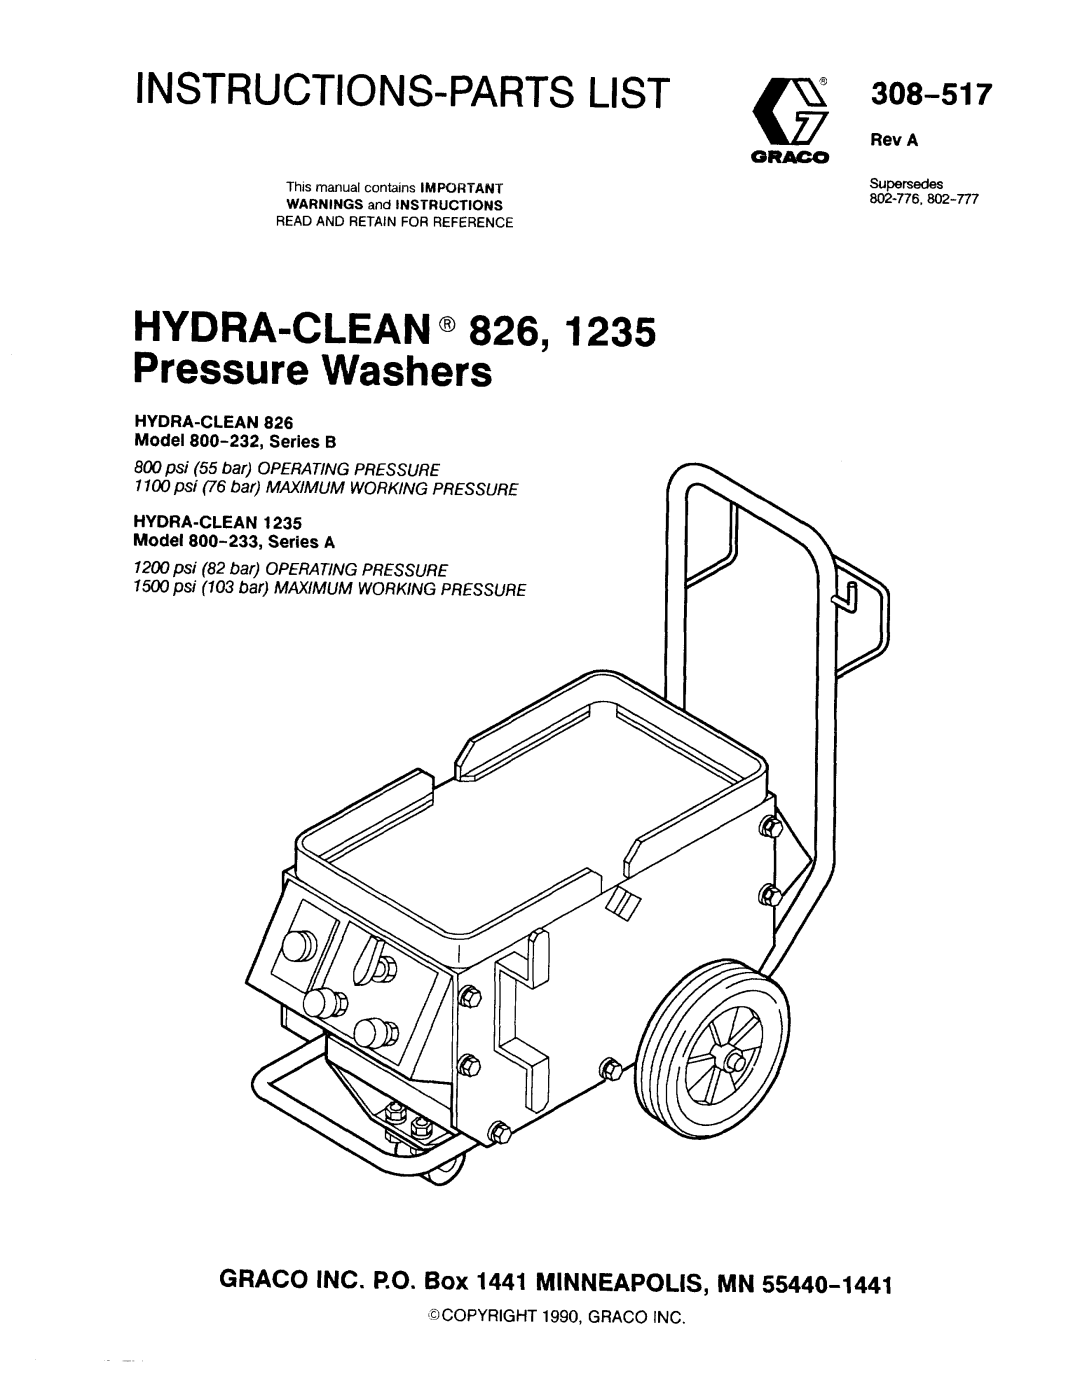 Graco Inc 308-517 manual Instructions-Partslist G@, HYDRA-CLEAN@826,1235 Pressure Washers, psi 55 bar OPERATINGPRESSURE 